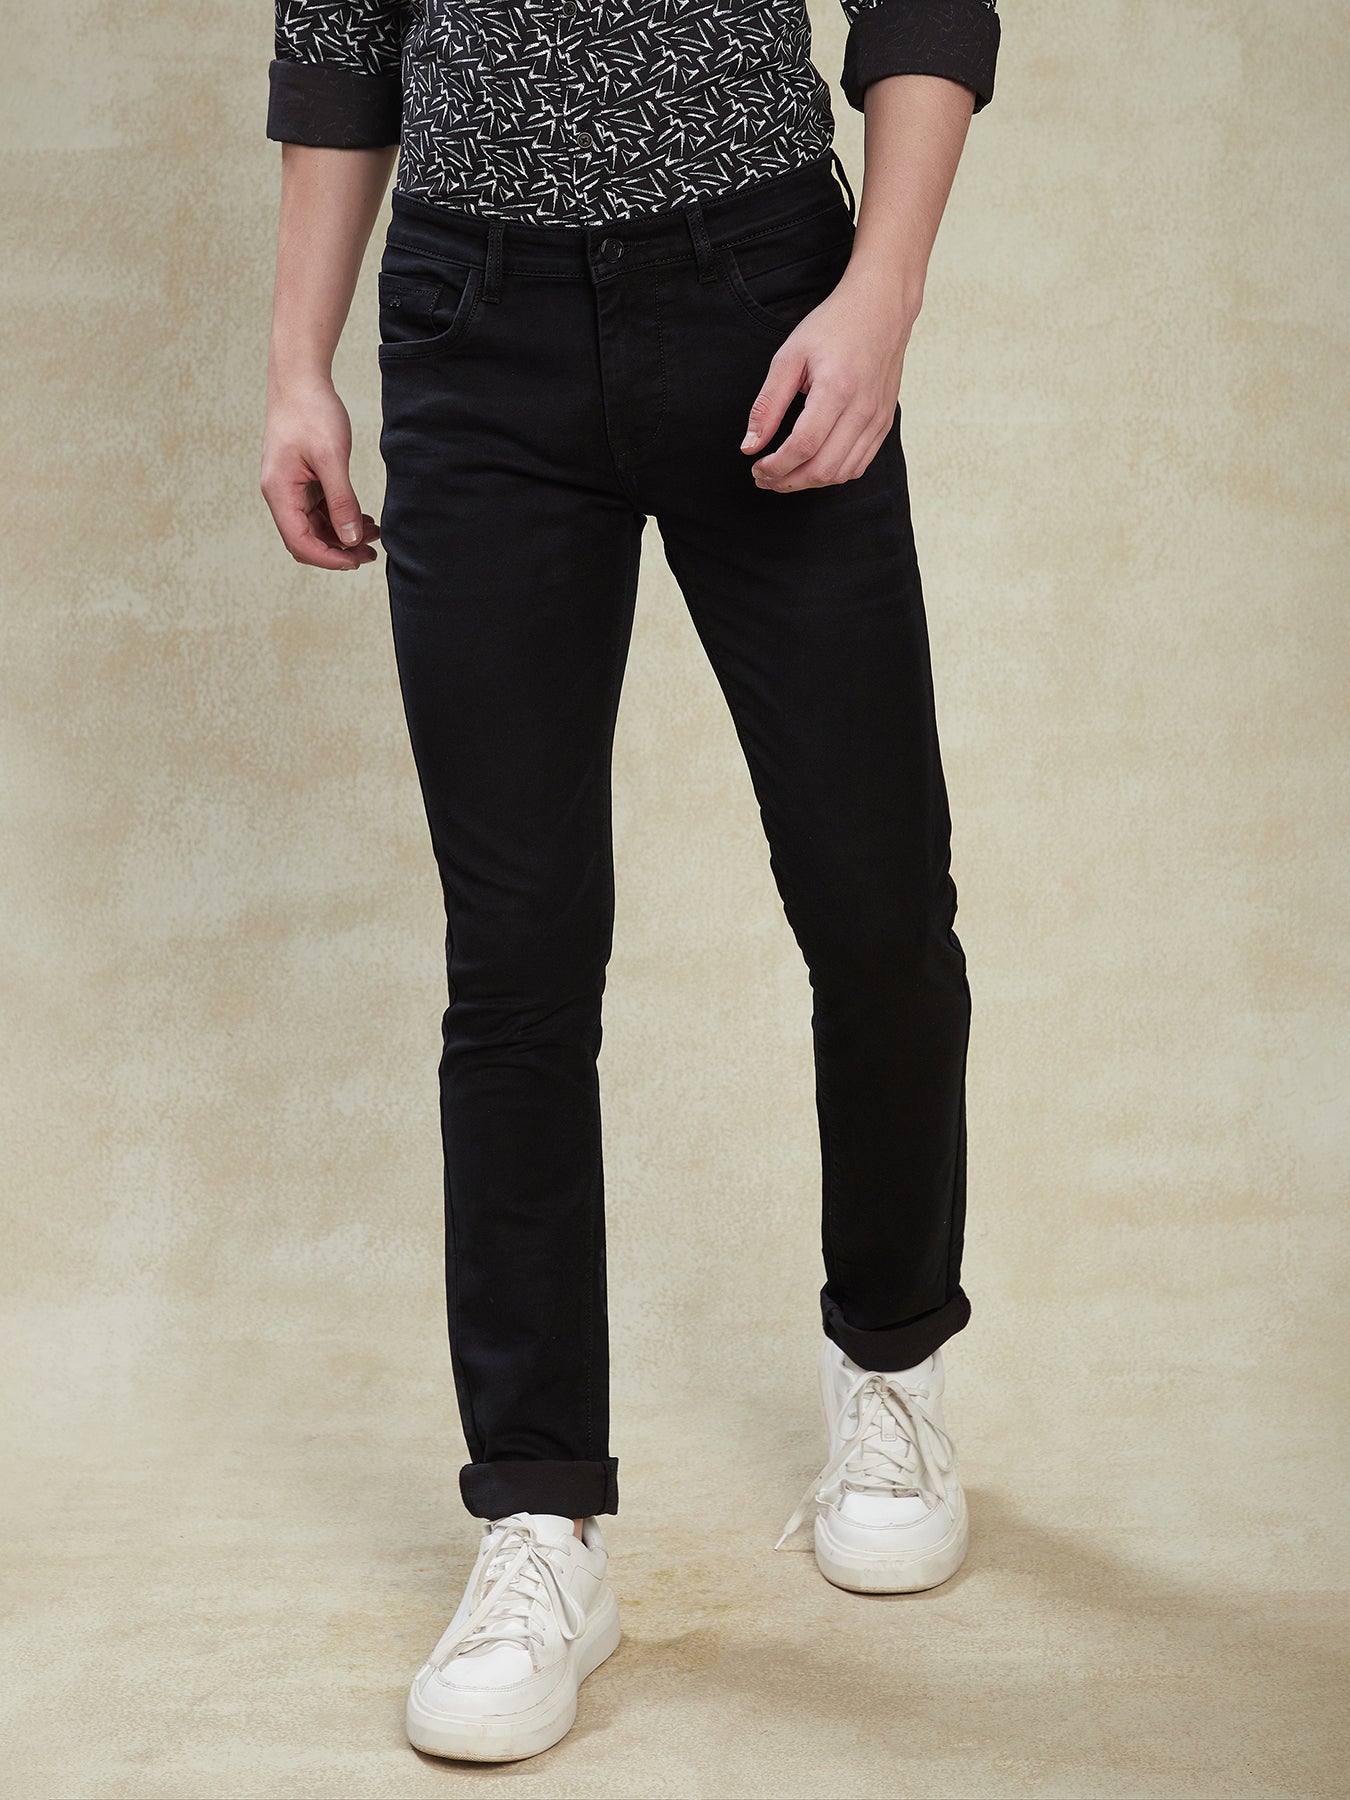 Cotton Stretch Black Plain Narrow Fit Flat Front Casual Jeans